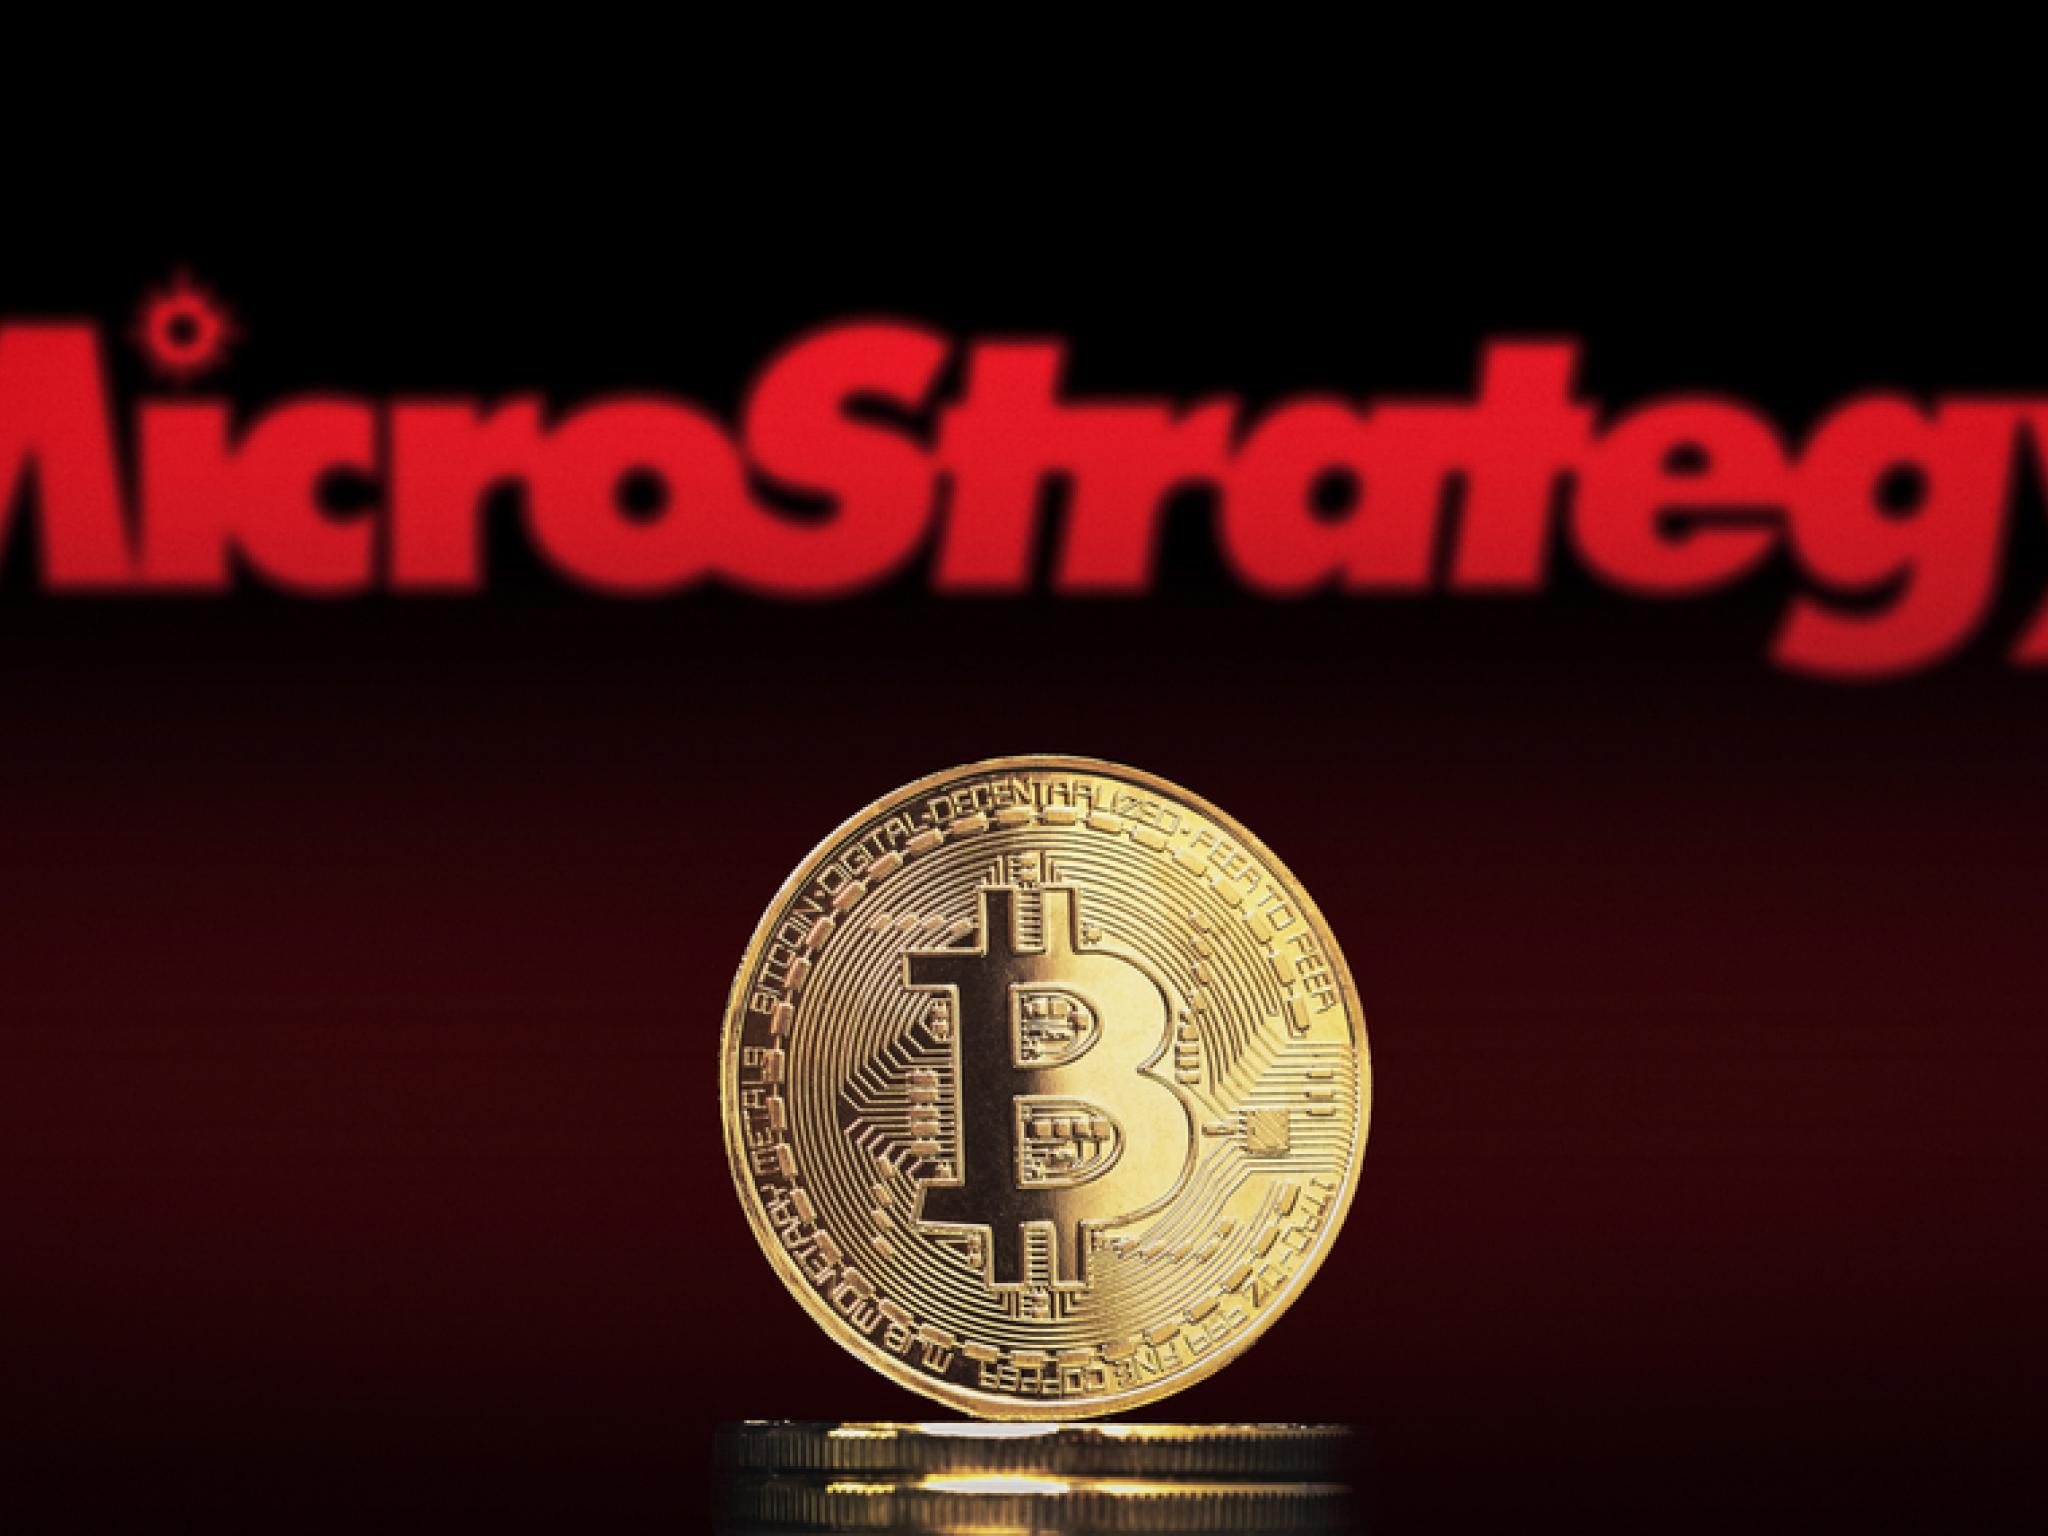  bitcoin-development-company-microstrategy-announces-10-for-1-stock-split 